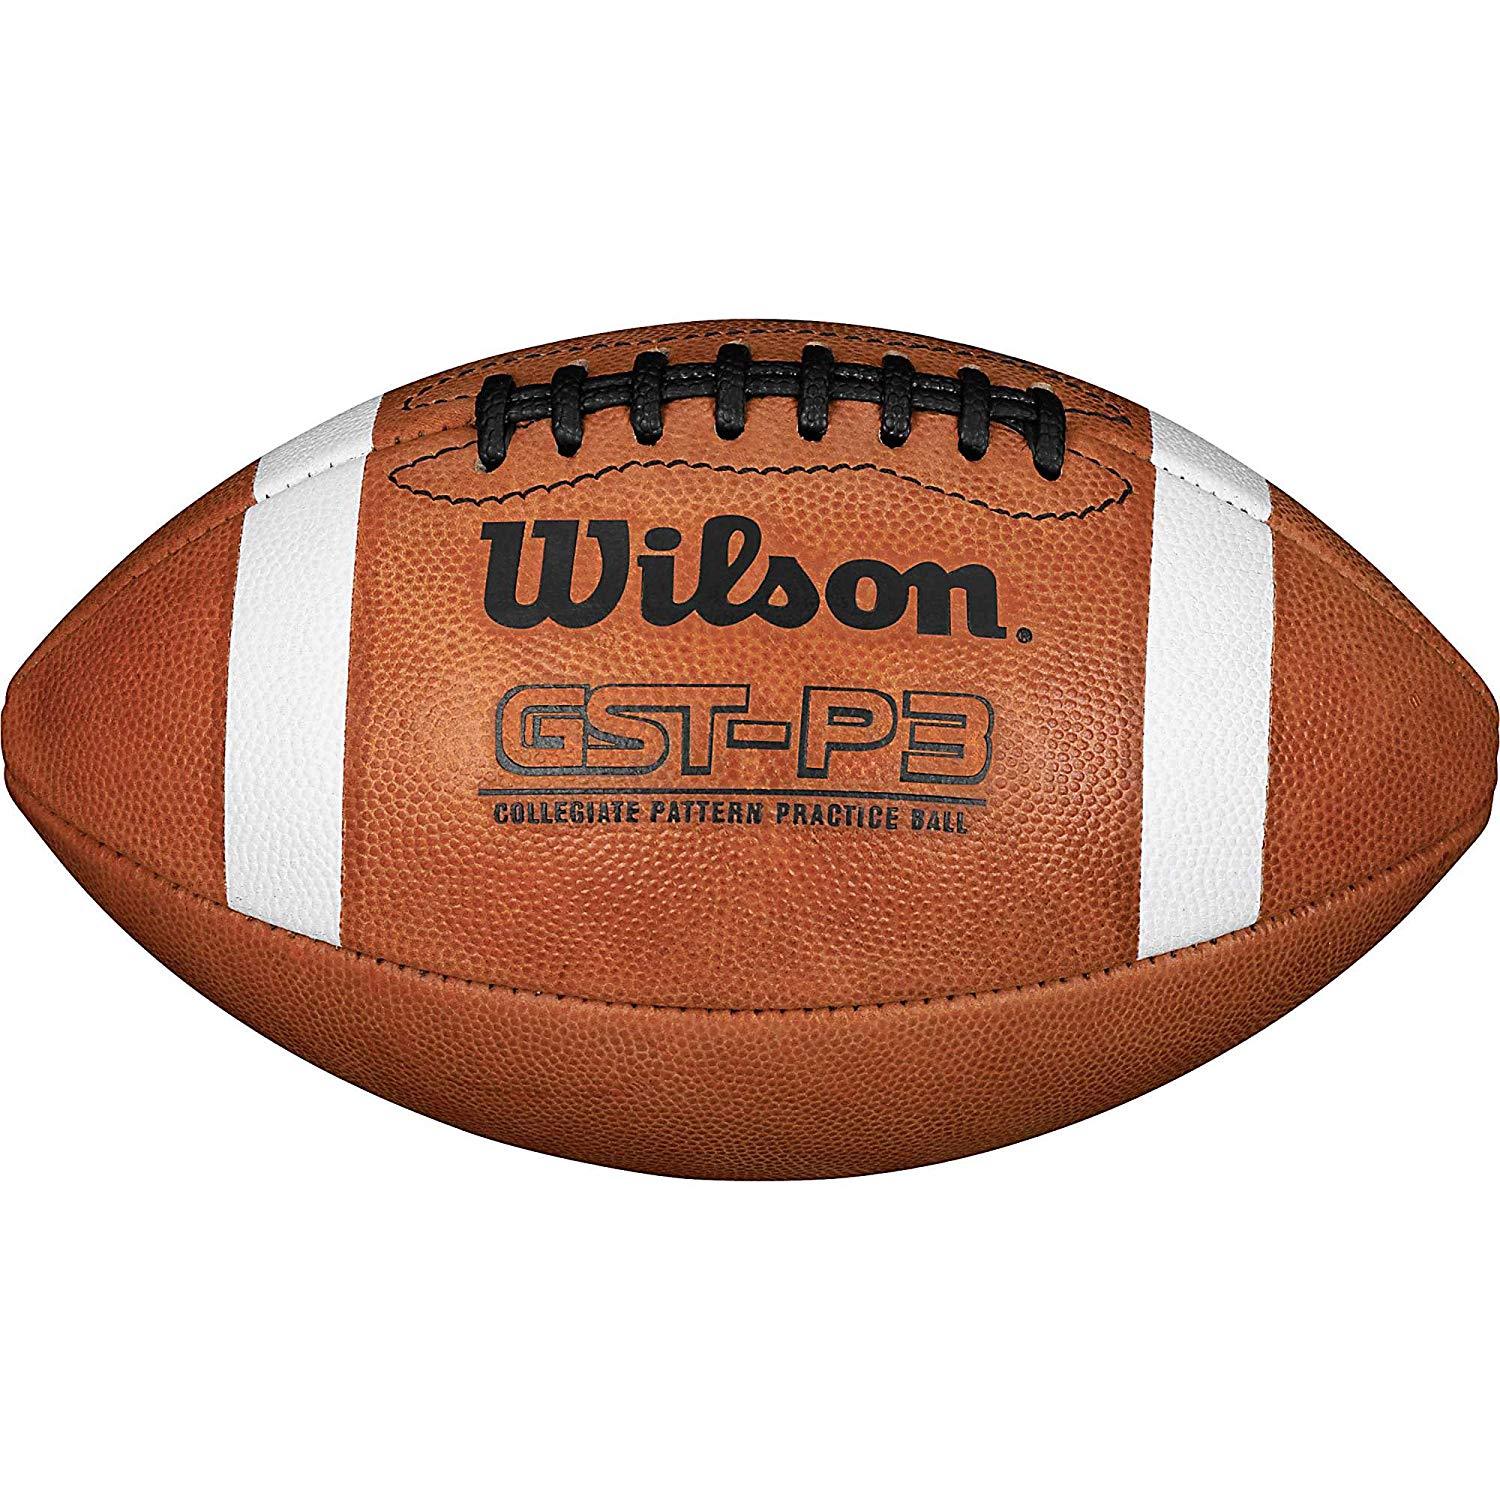 1003 Pattern Wilson GST Practice Football